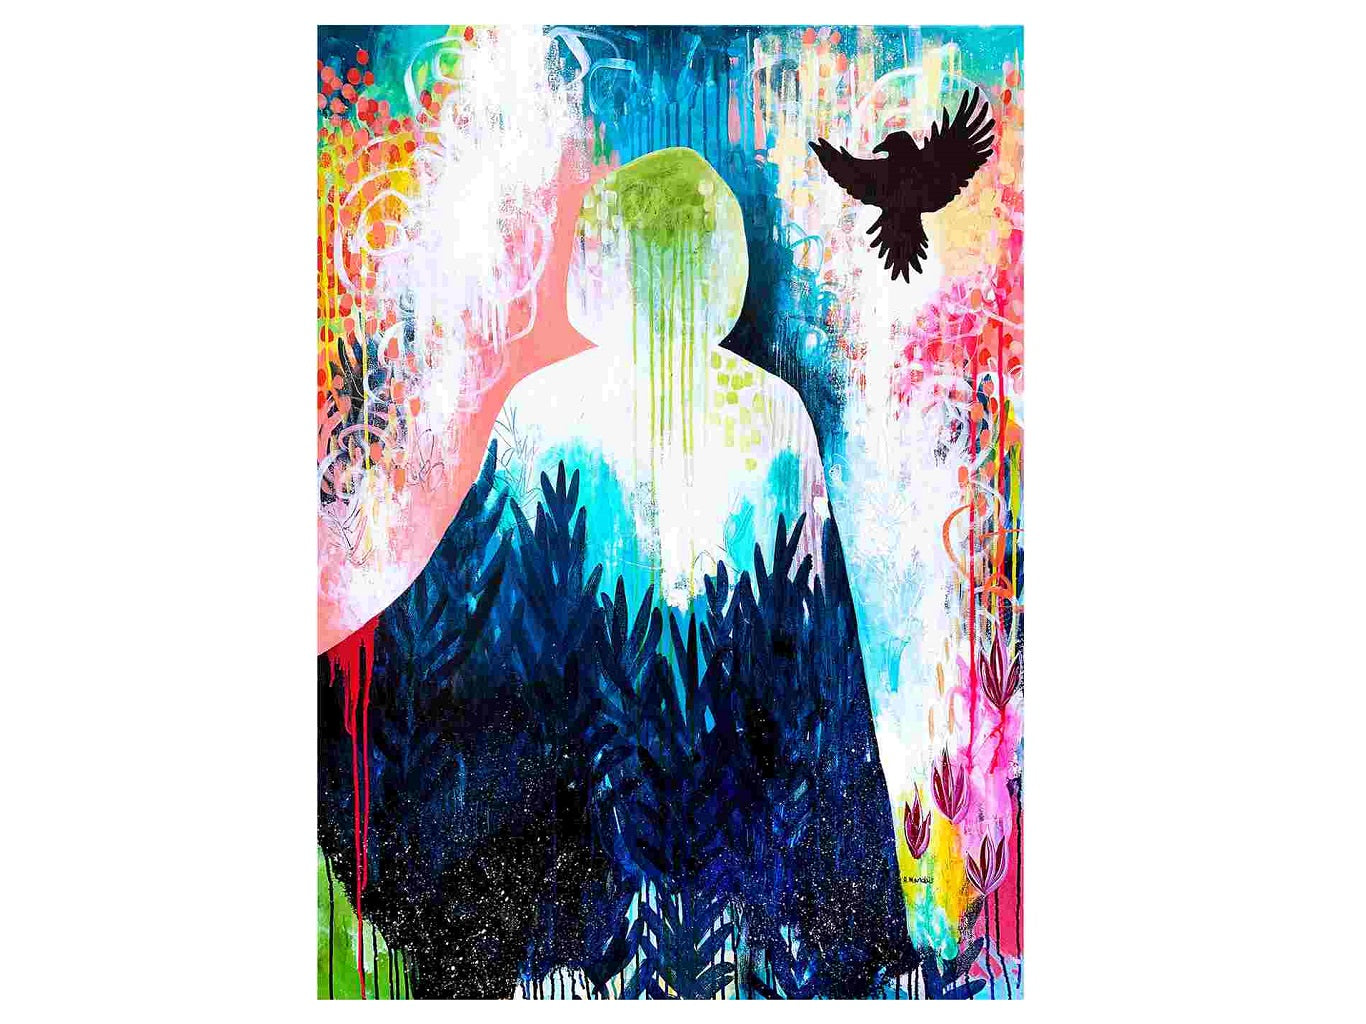 AM 108 Released acrylic - painting - canvas - silhouette - bird - nature - colorful - art - décor Audree Marsolais (1)